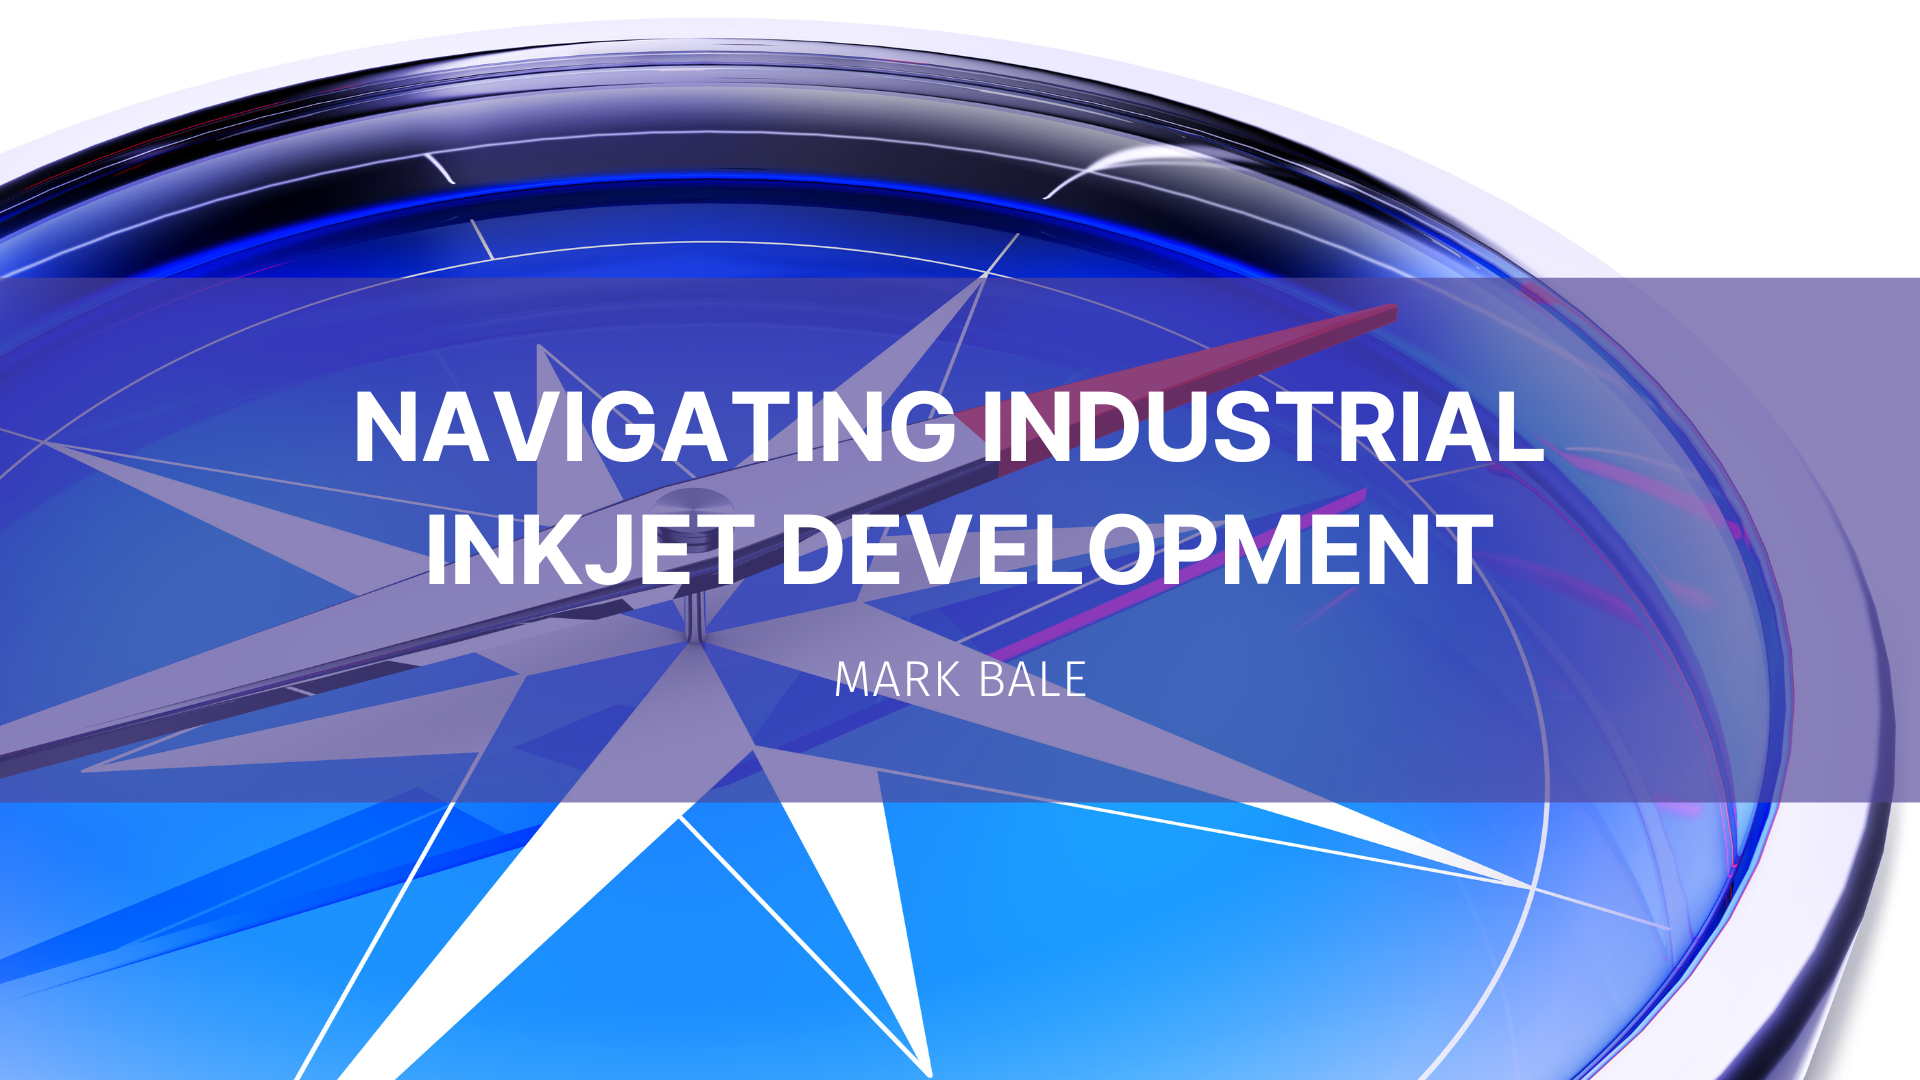 Featured image for “Navigating Industrial Inkjet Development”